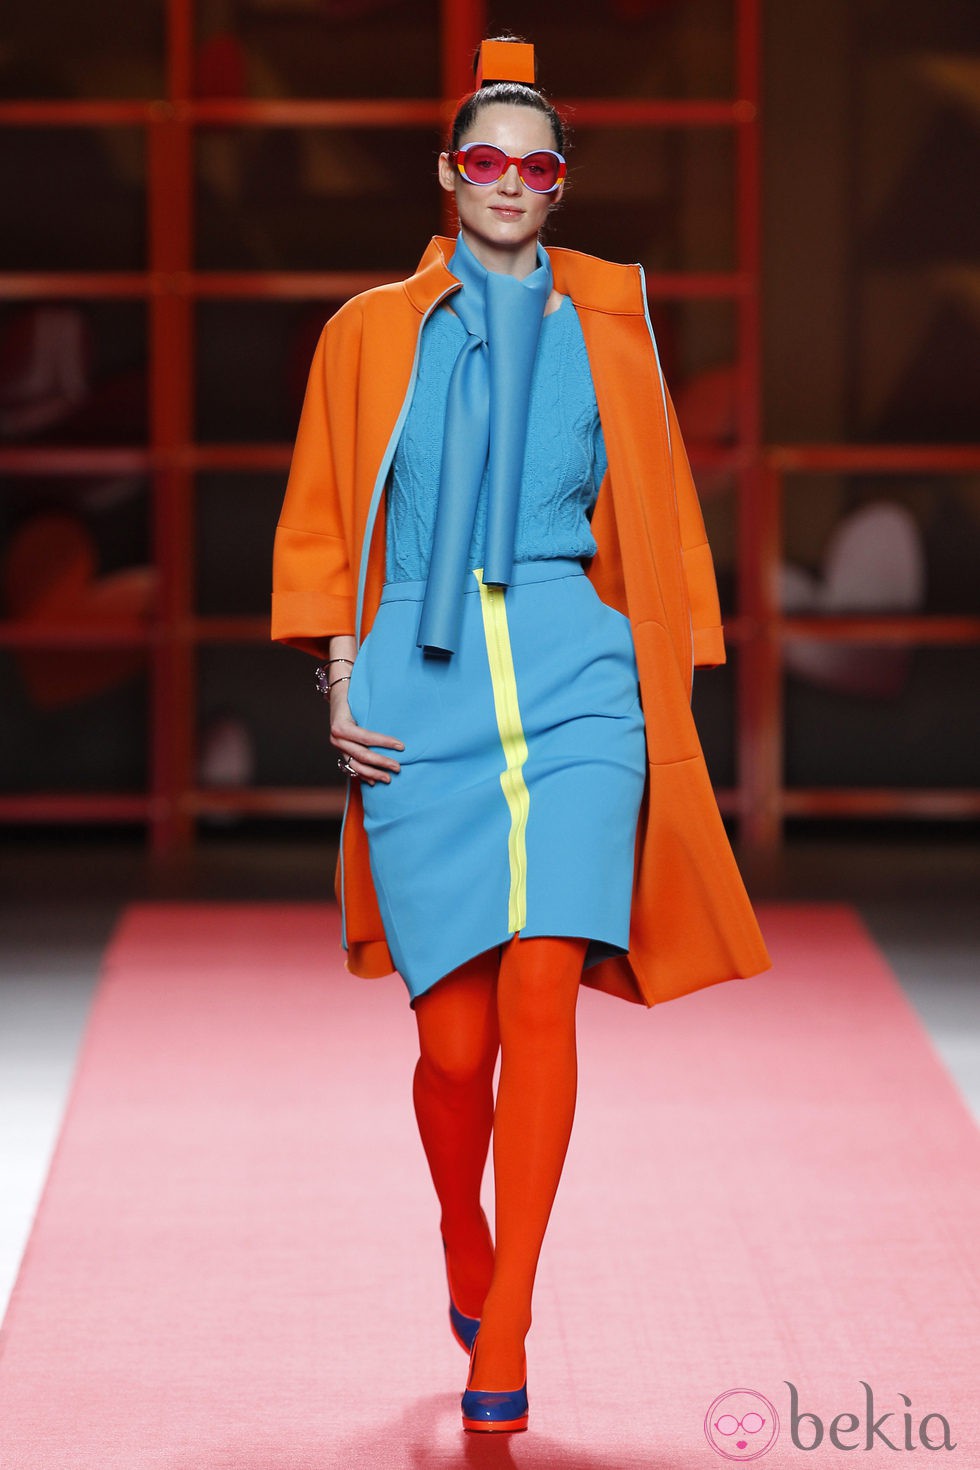 Abrigo naranja con falda azul de Agatha Ruiz de la Prada en la Madrid Fashion Week